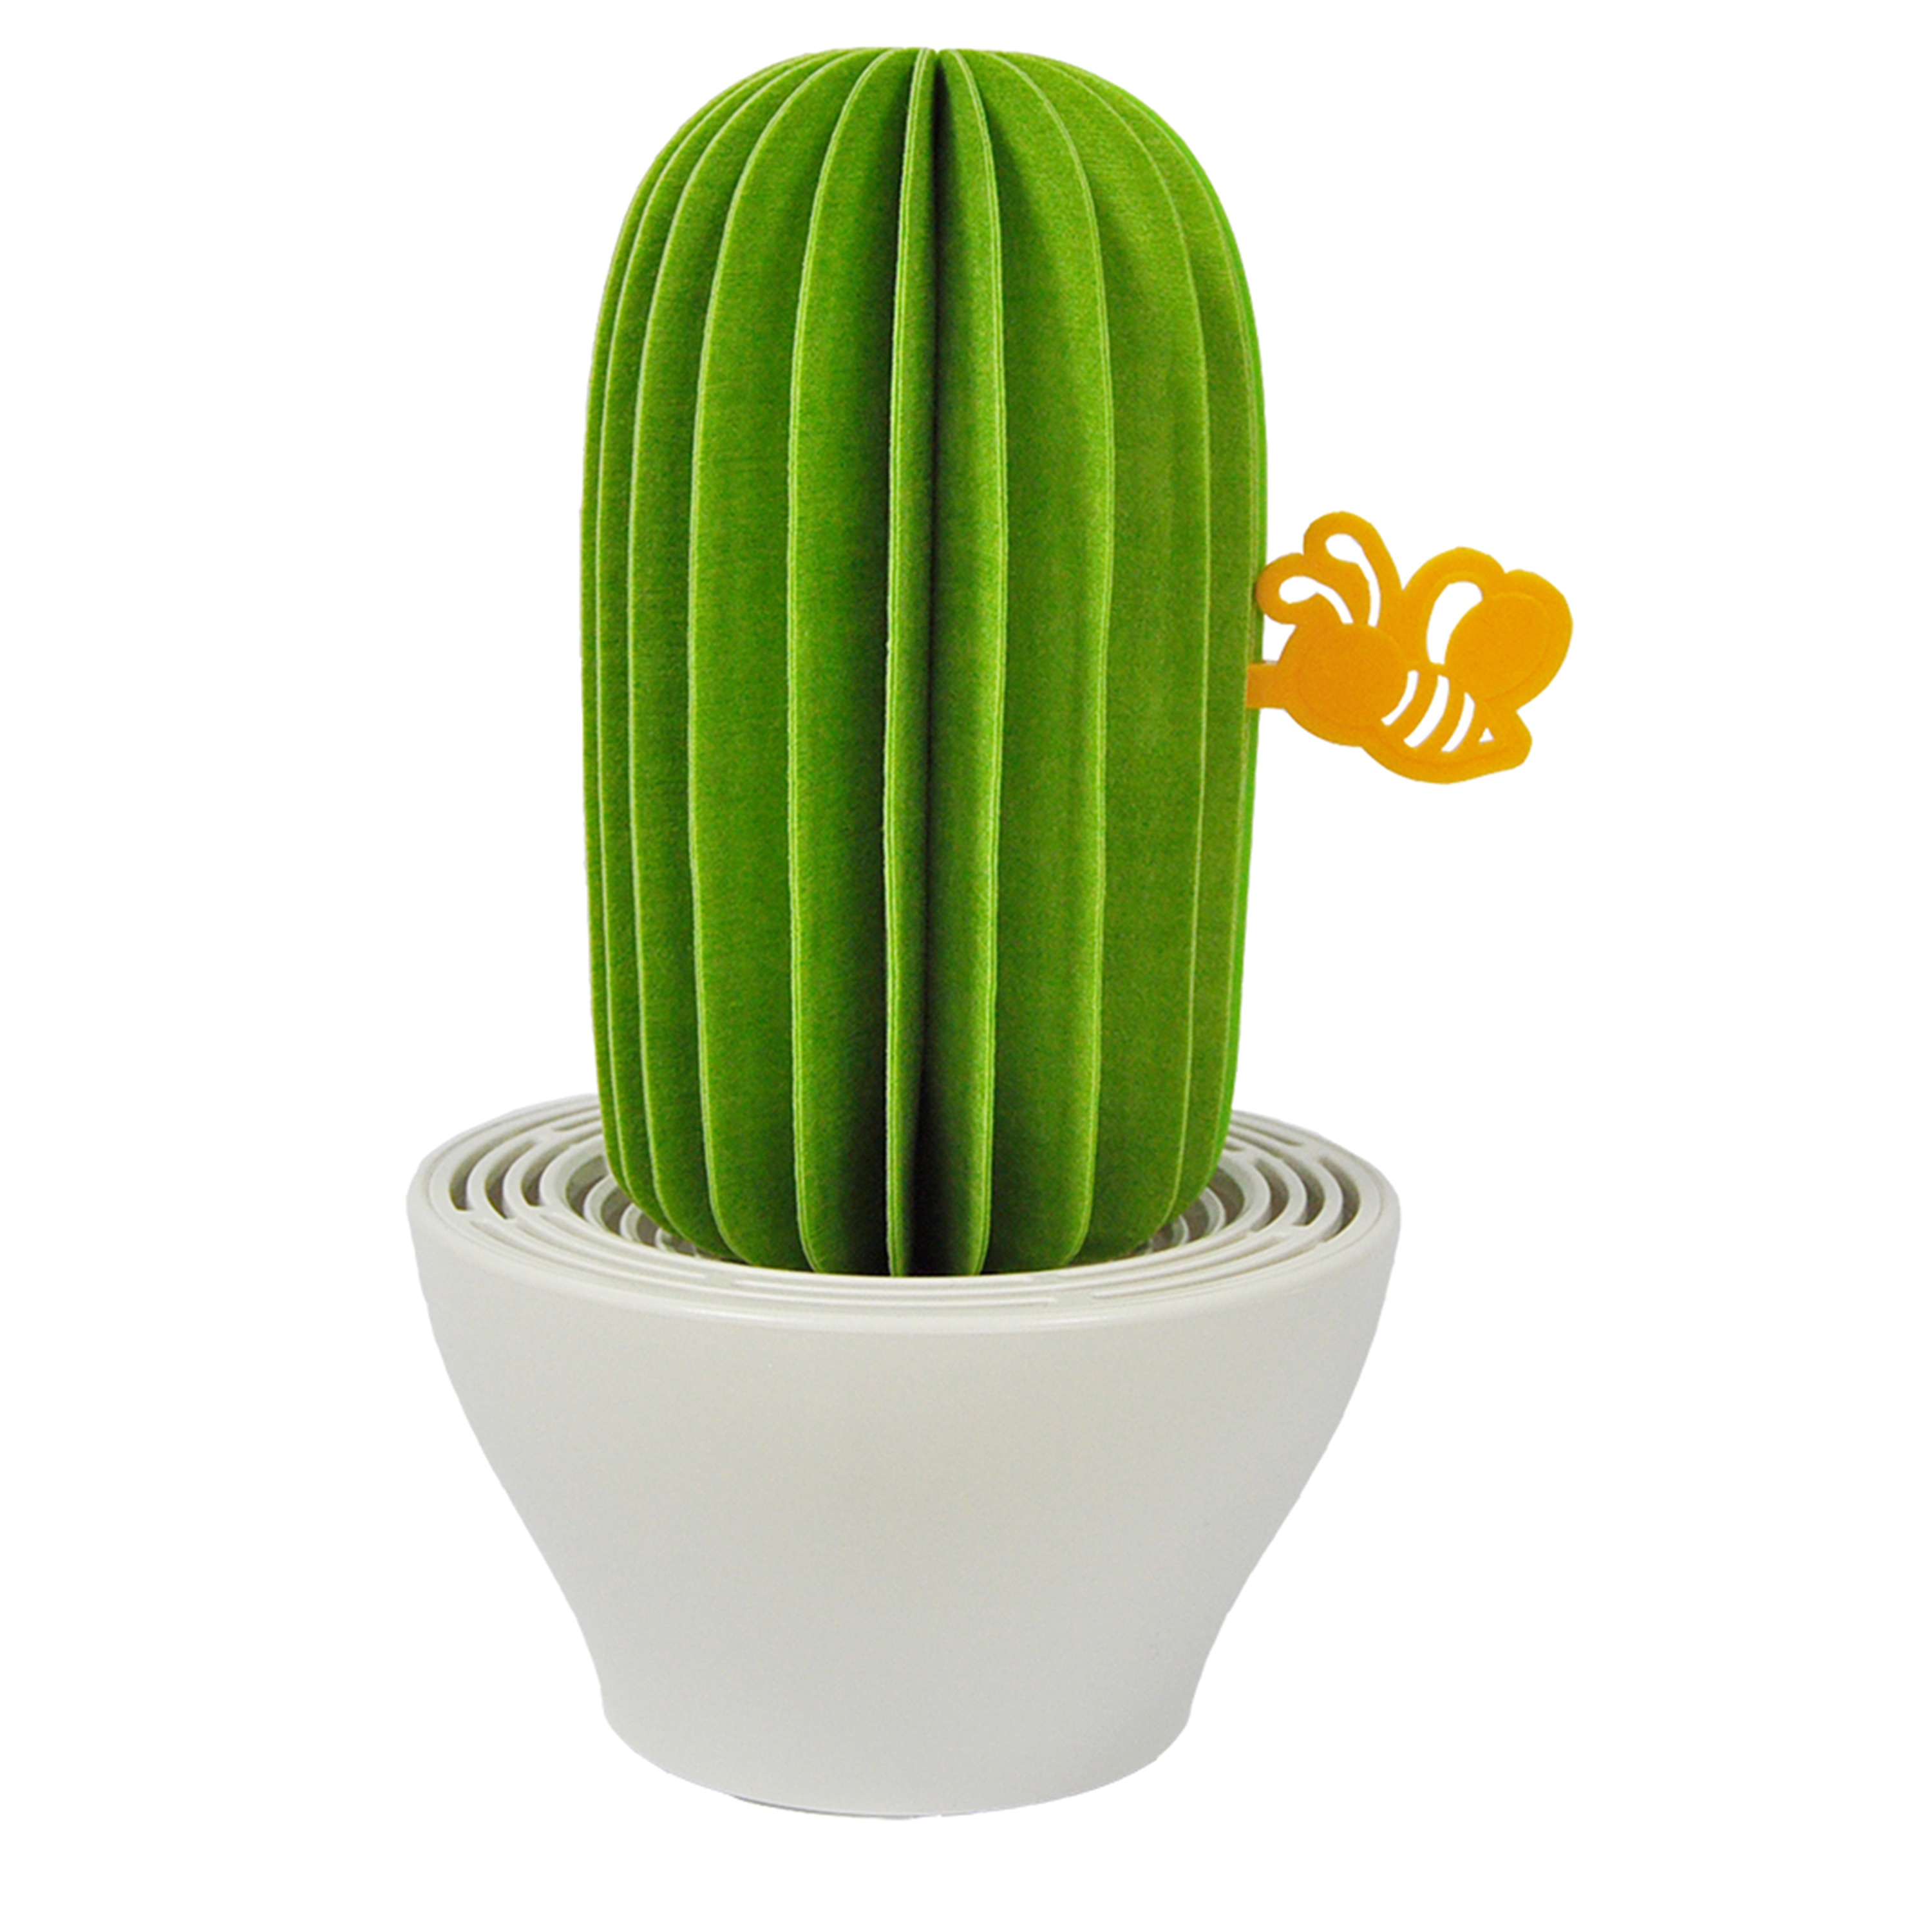 Nanum Felt Cactus Non-Electric Personal Humidifier